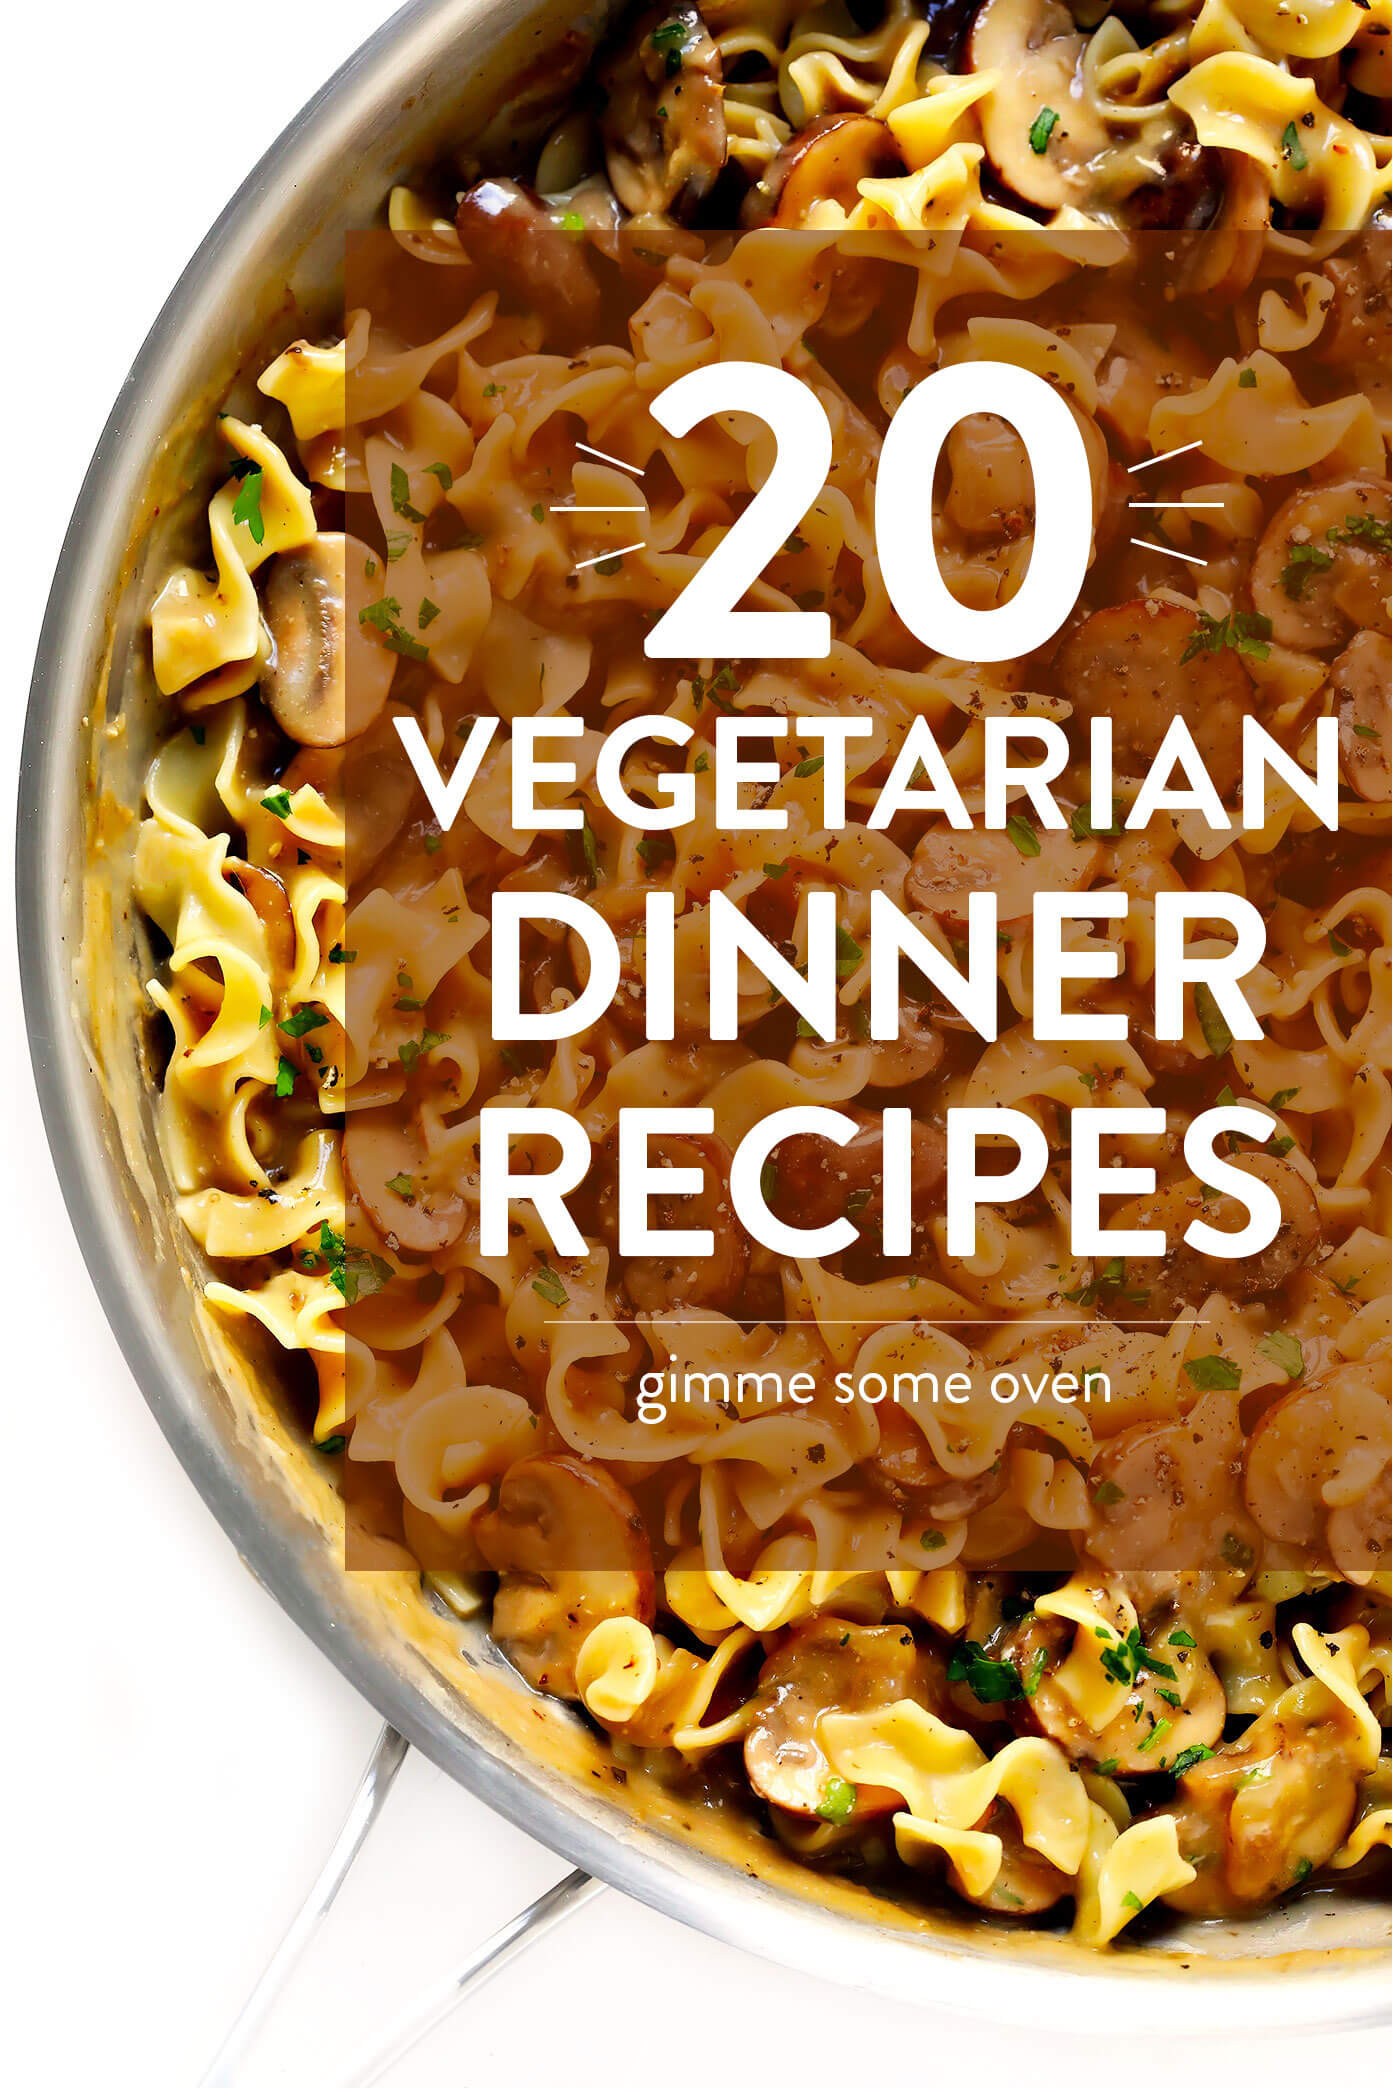 Vegetarian Dinner Ideas
 20 Ve arian Dinner Recipes That Everyone Will LOVE